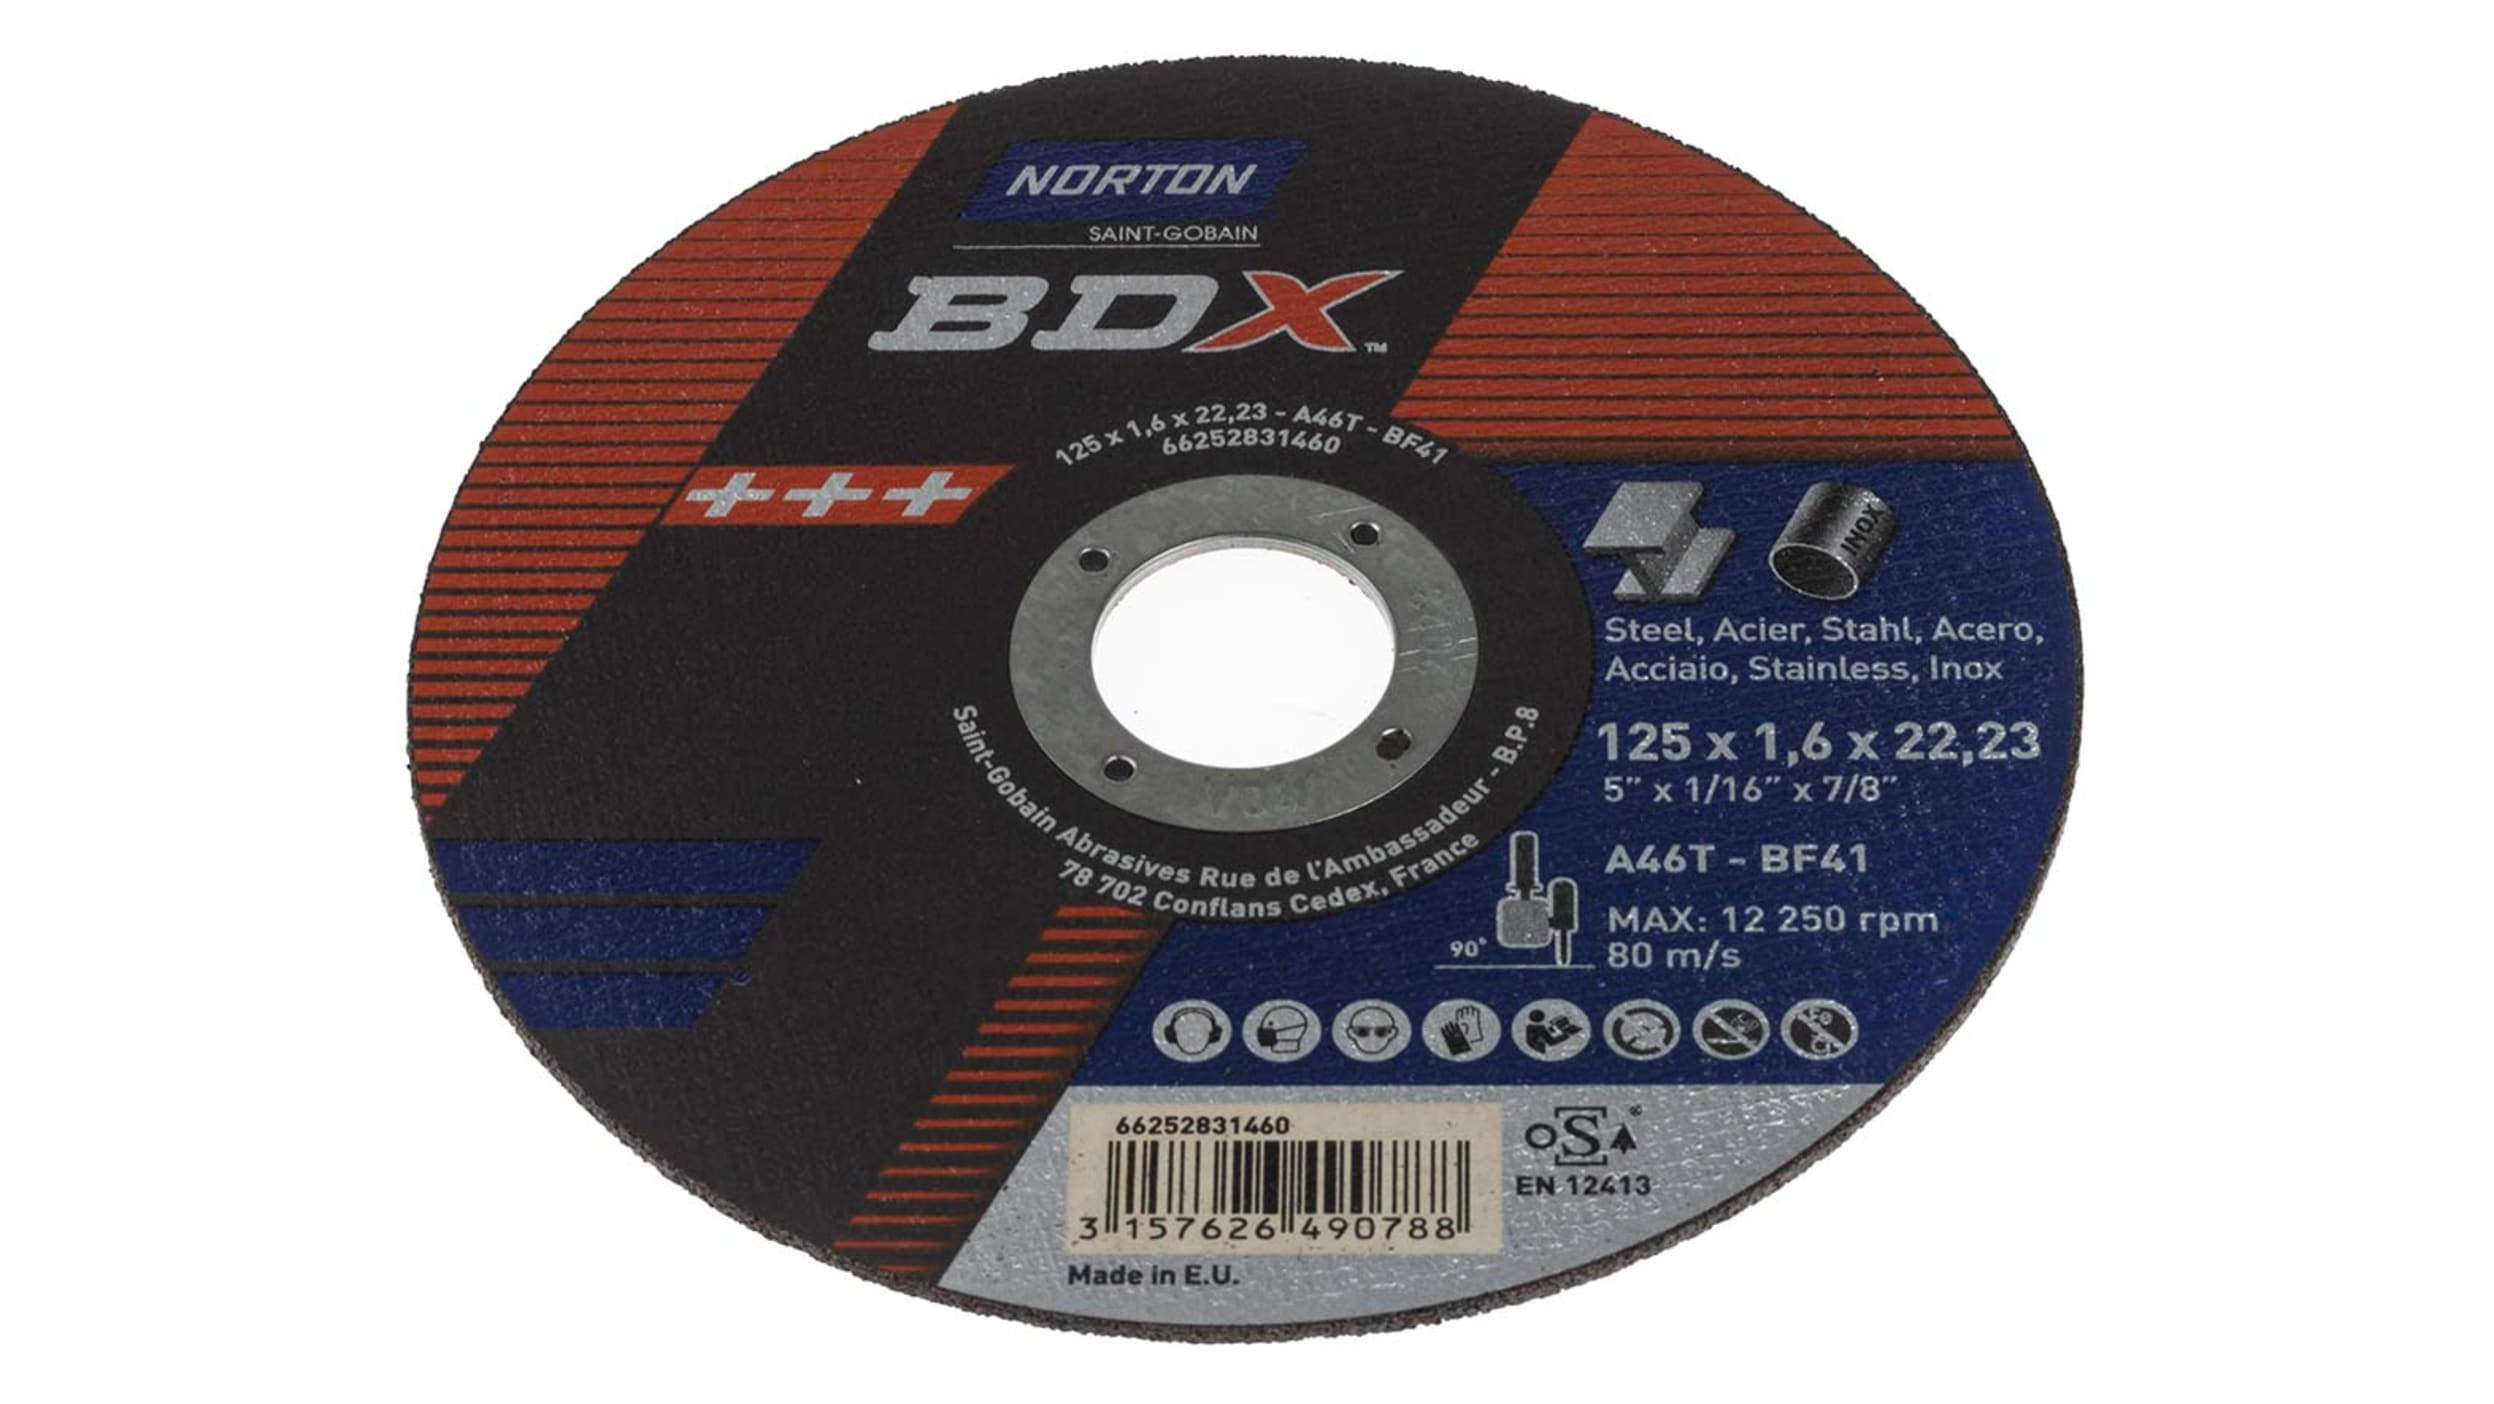 66252831460 Norton  Norton Cutting Disc Aluminium Oxide Cutting